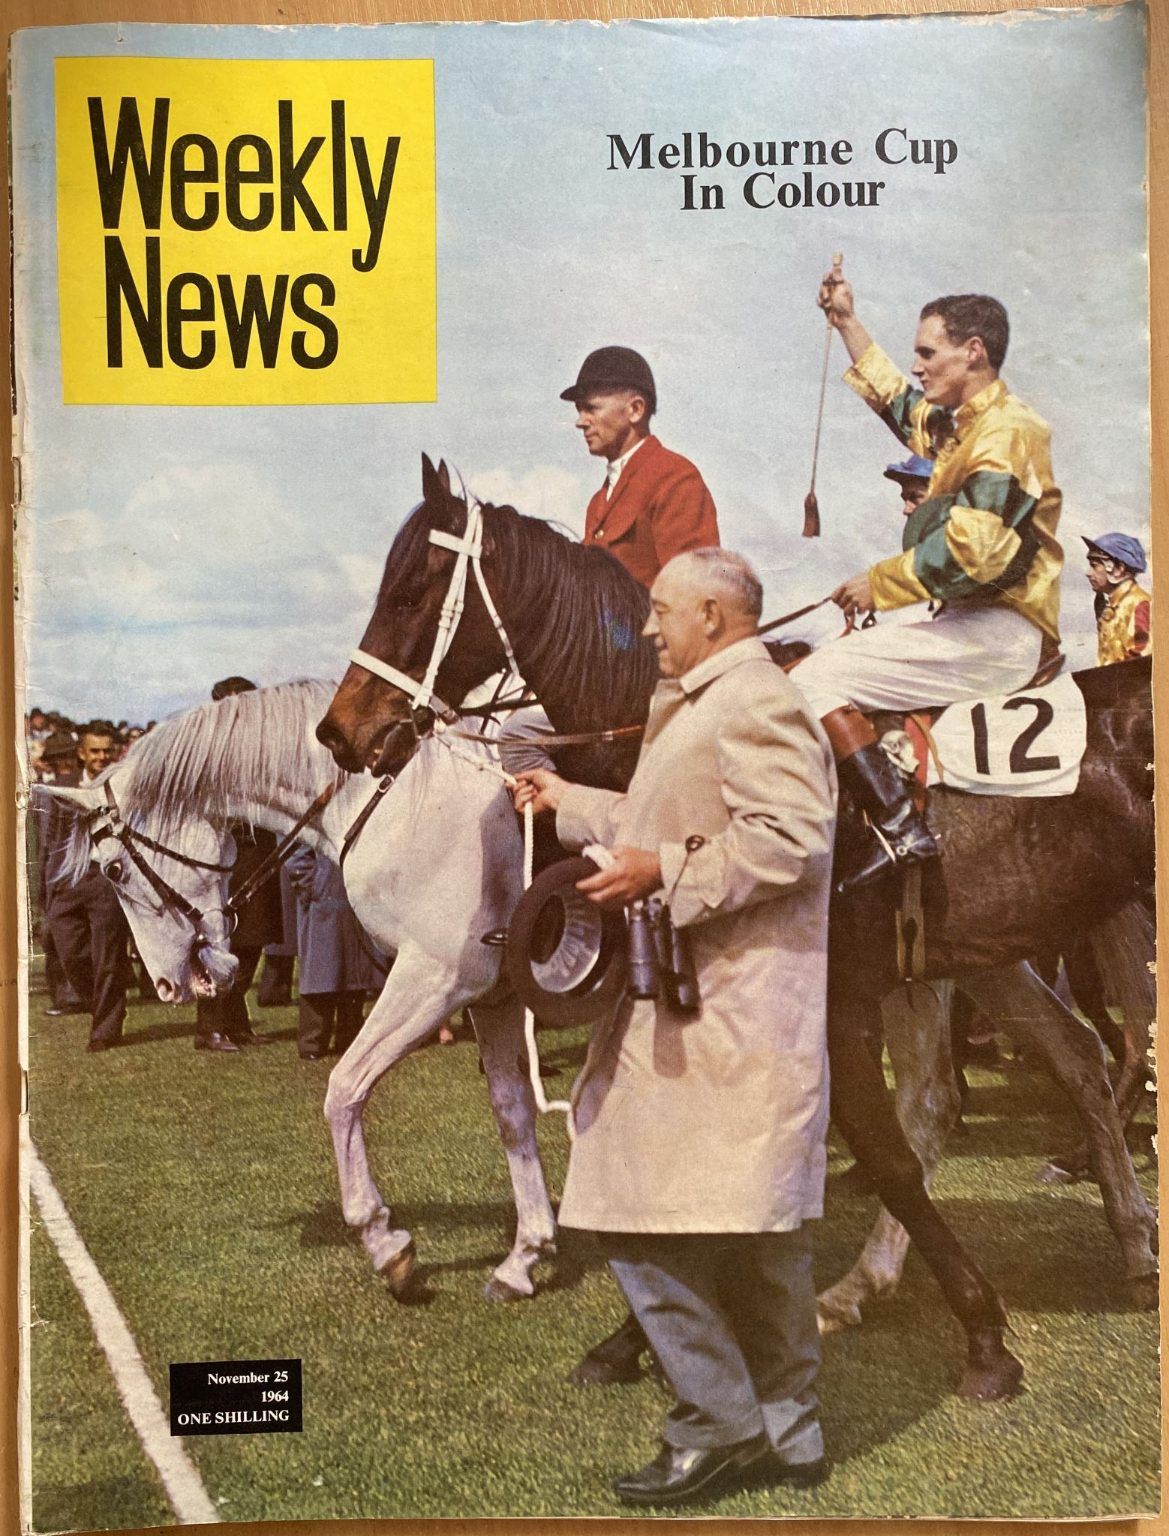 OLD NEWSPAPER: Weekly News, No. 5270, 25 November 1964